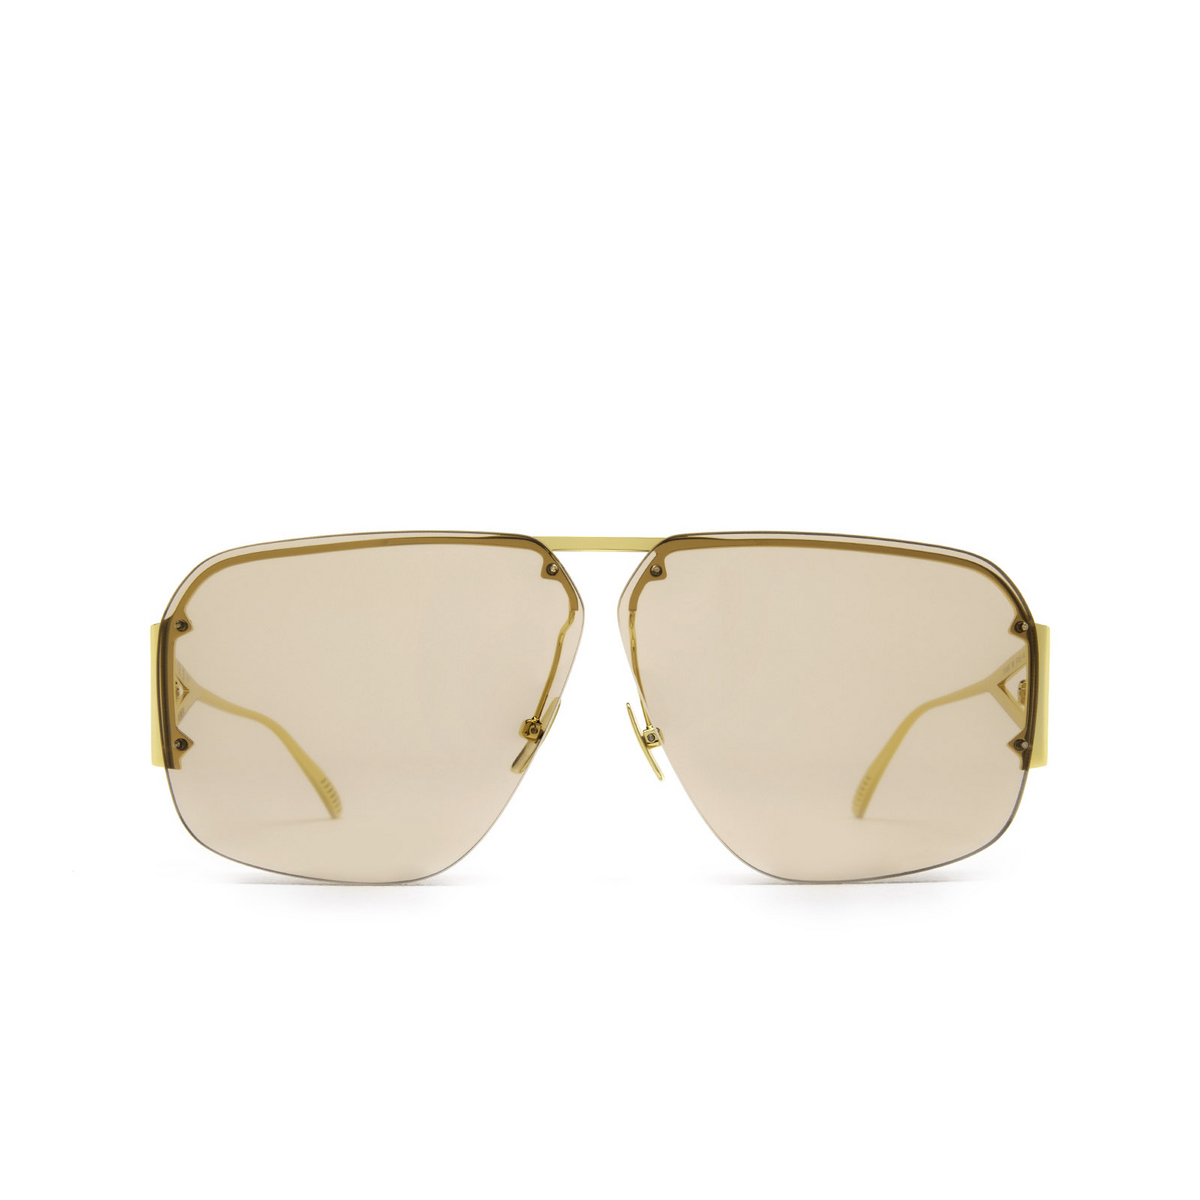 Bottega Veneta® Irregular Sunglasses: BV1065S color Gold 008 - front view.